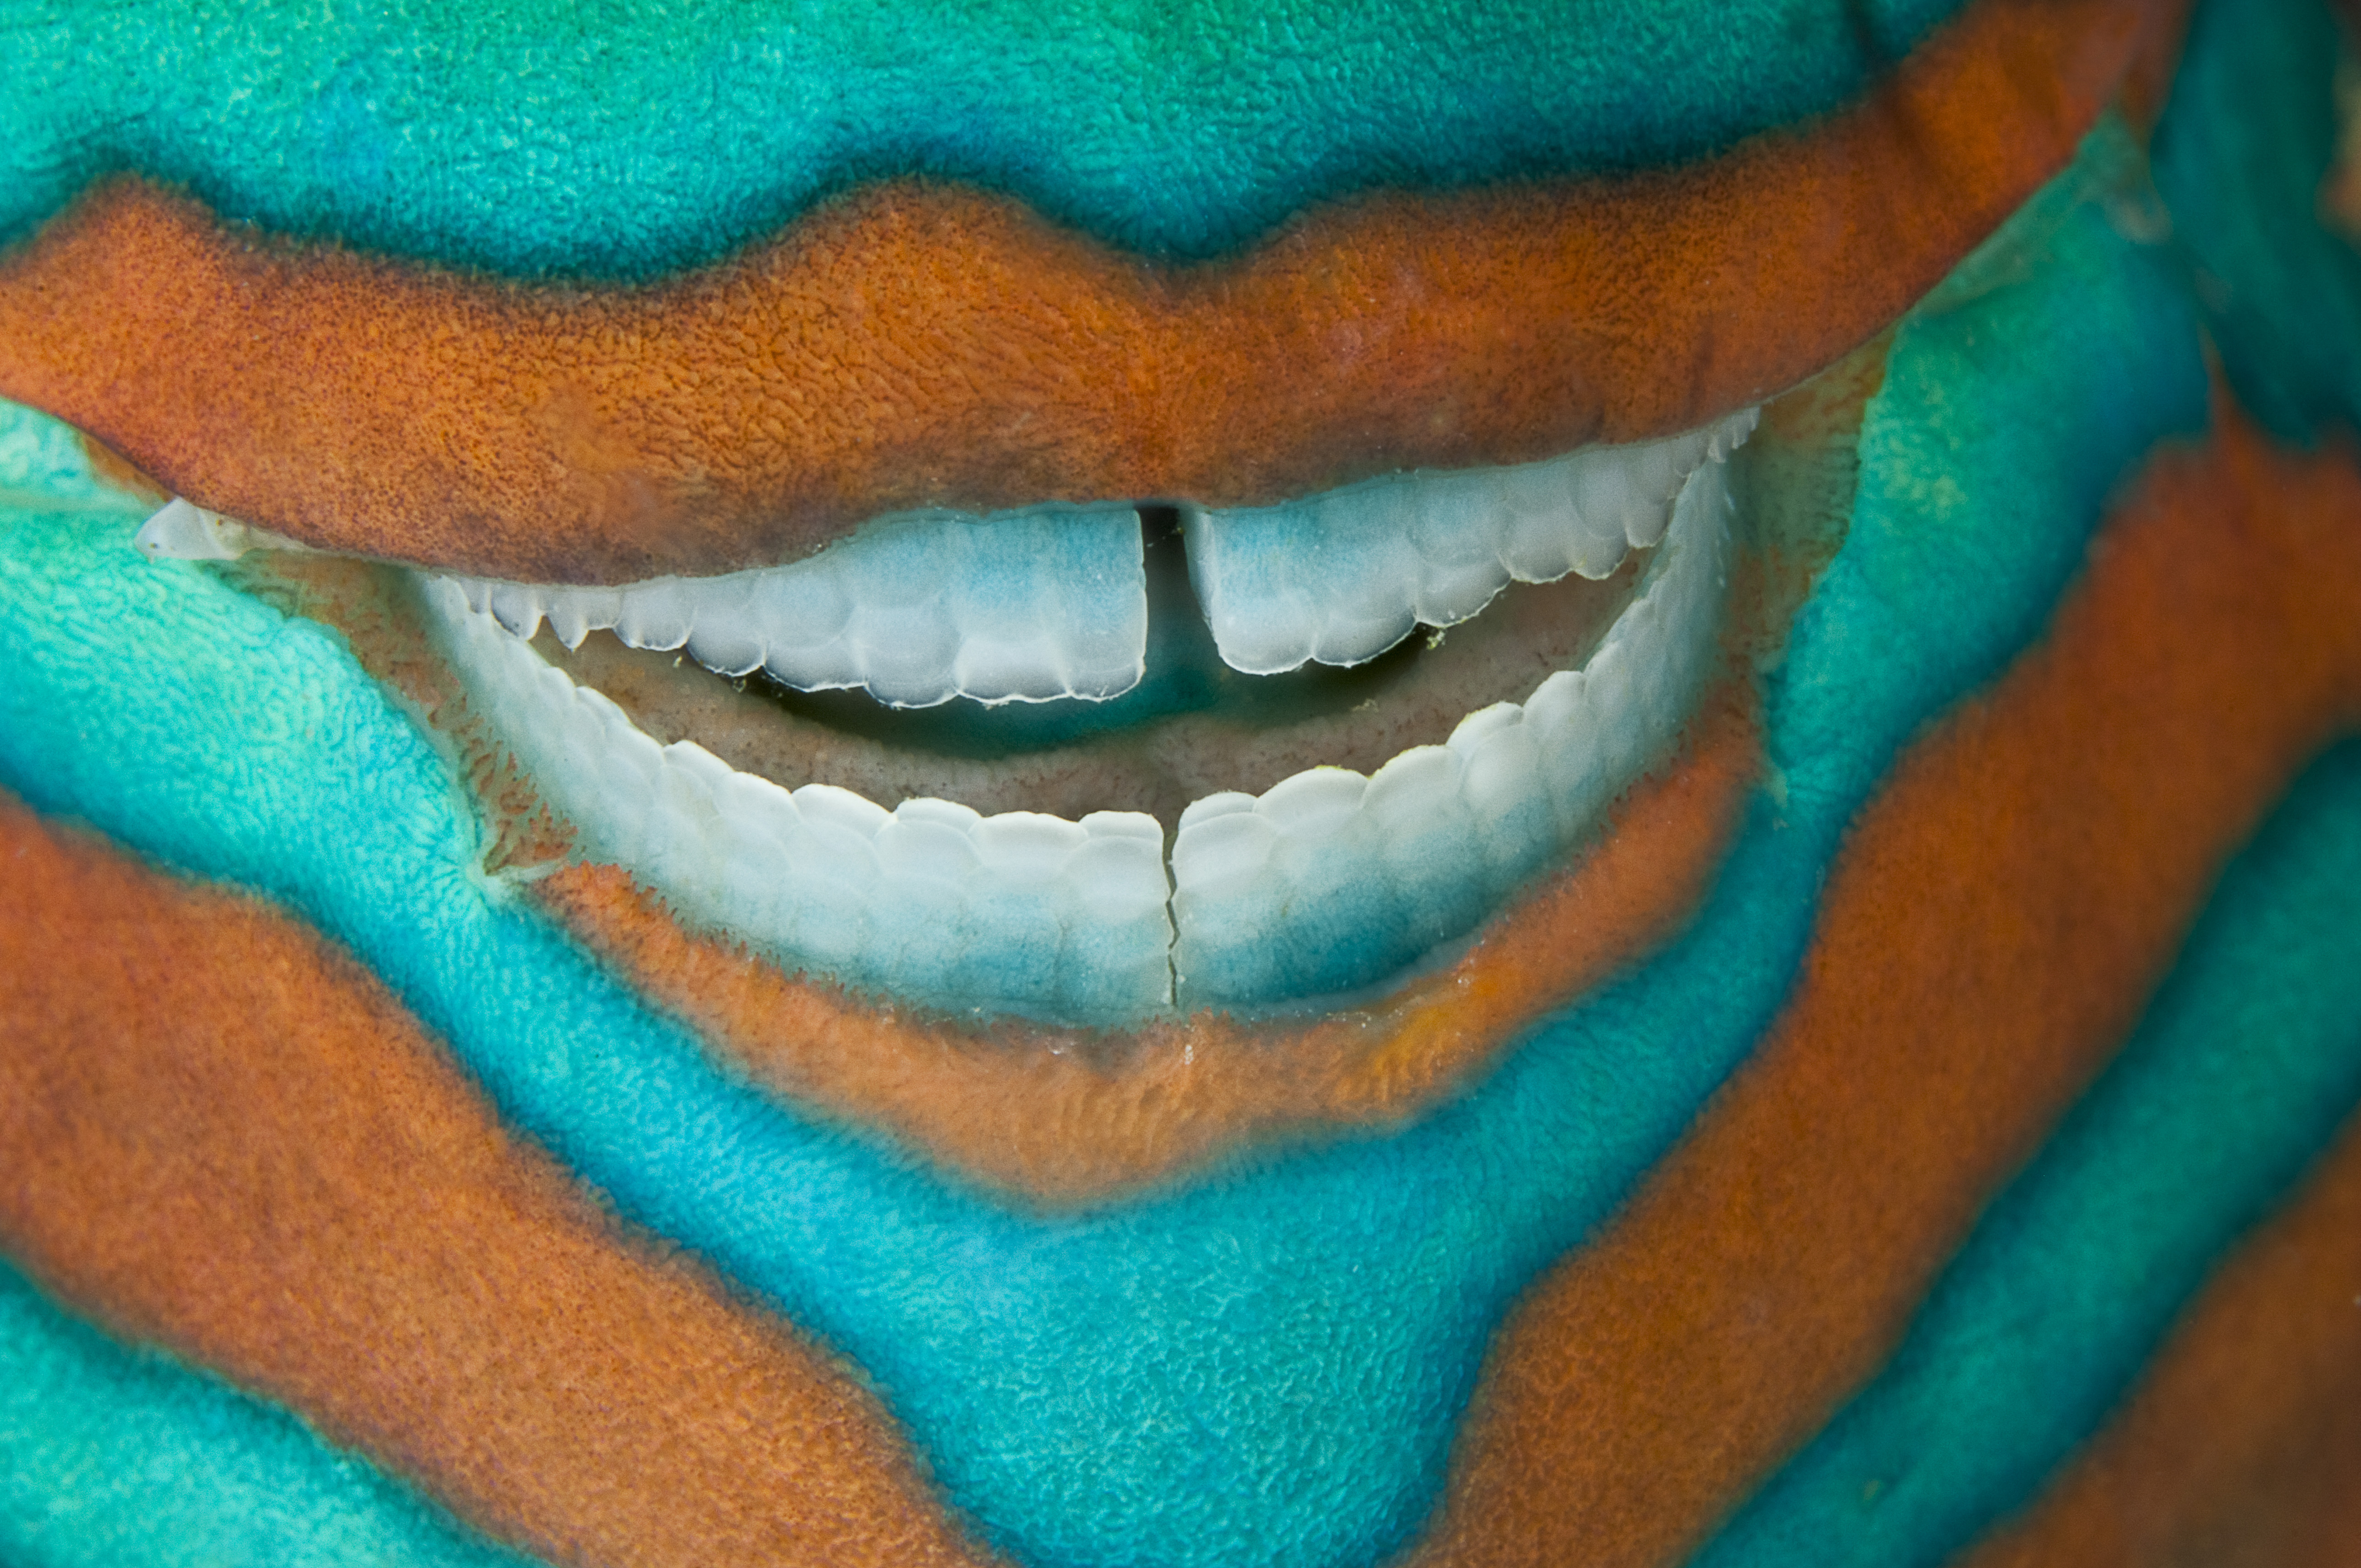 parrot fish smile